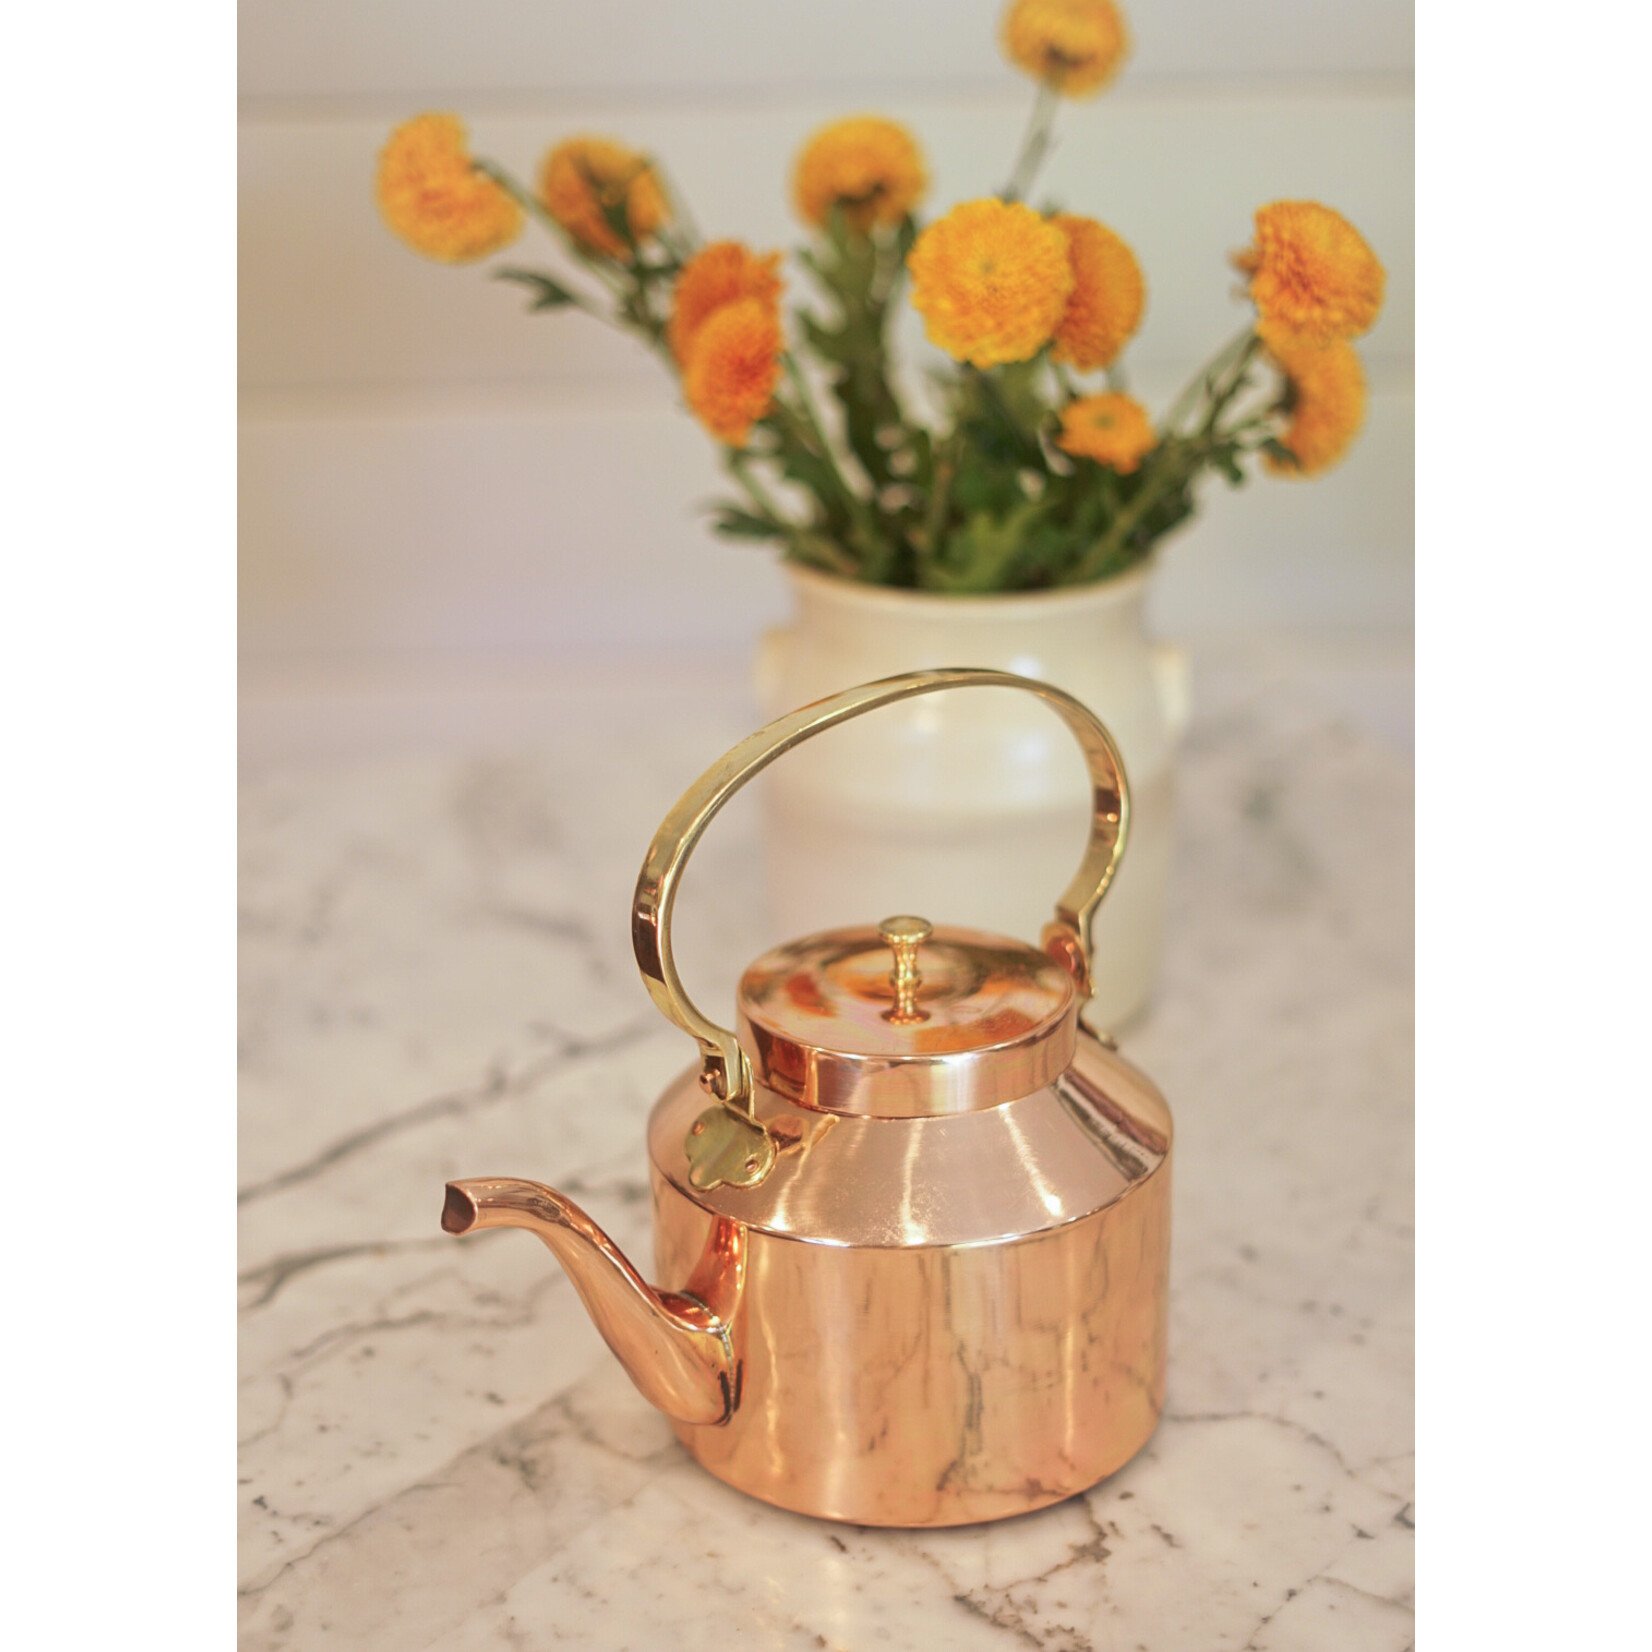 Galley & Fen English Copper Tea Kettle